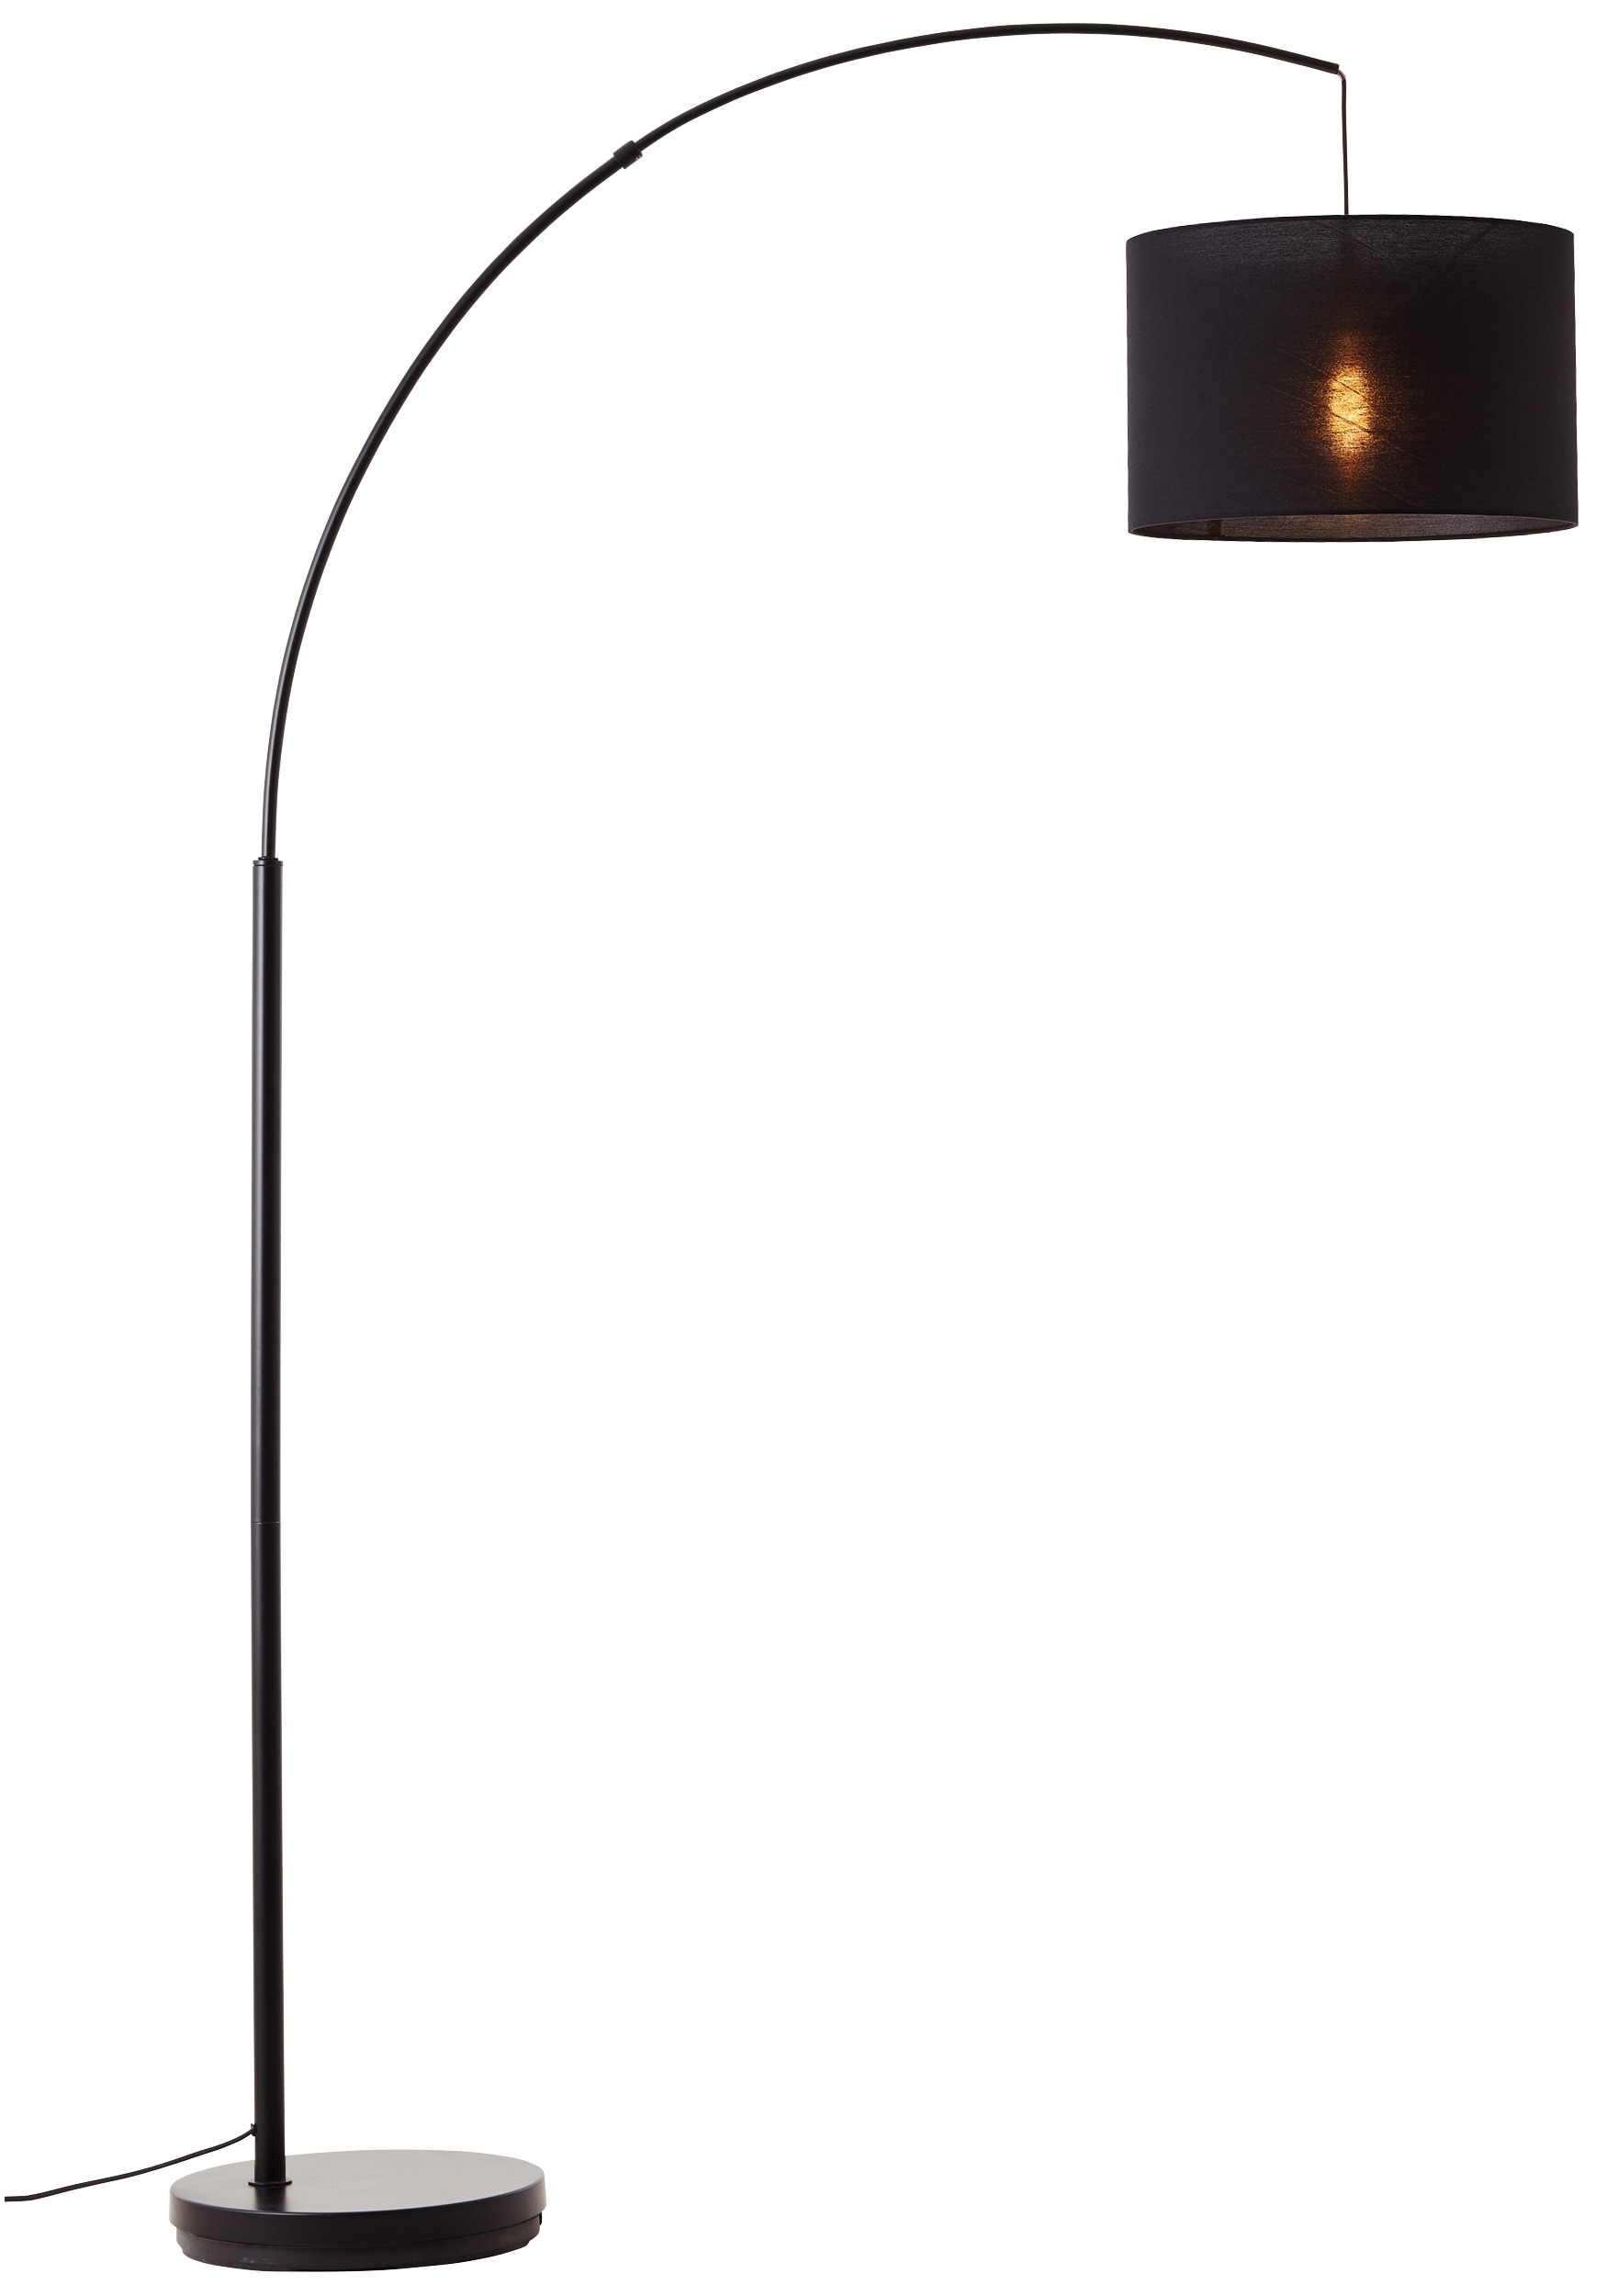 Bogenlampe 1 ❤ Stehlampe Stoff Textilschirm flammig-flammig, Jelmoli-Online Ø 36cm »Elijah«, Style of Places Shop kaufen im